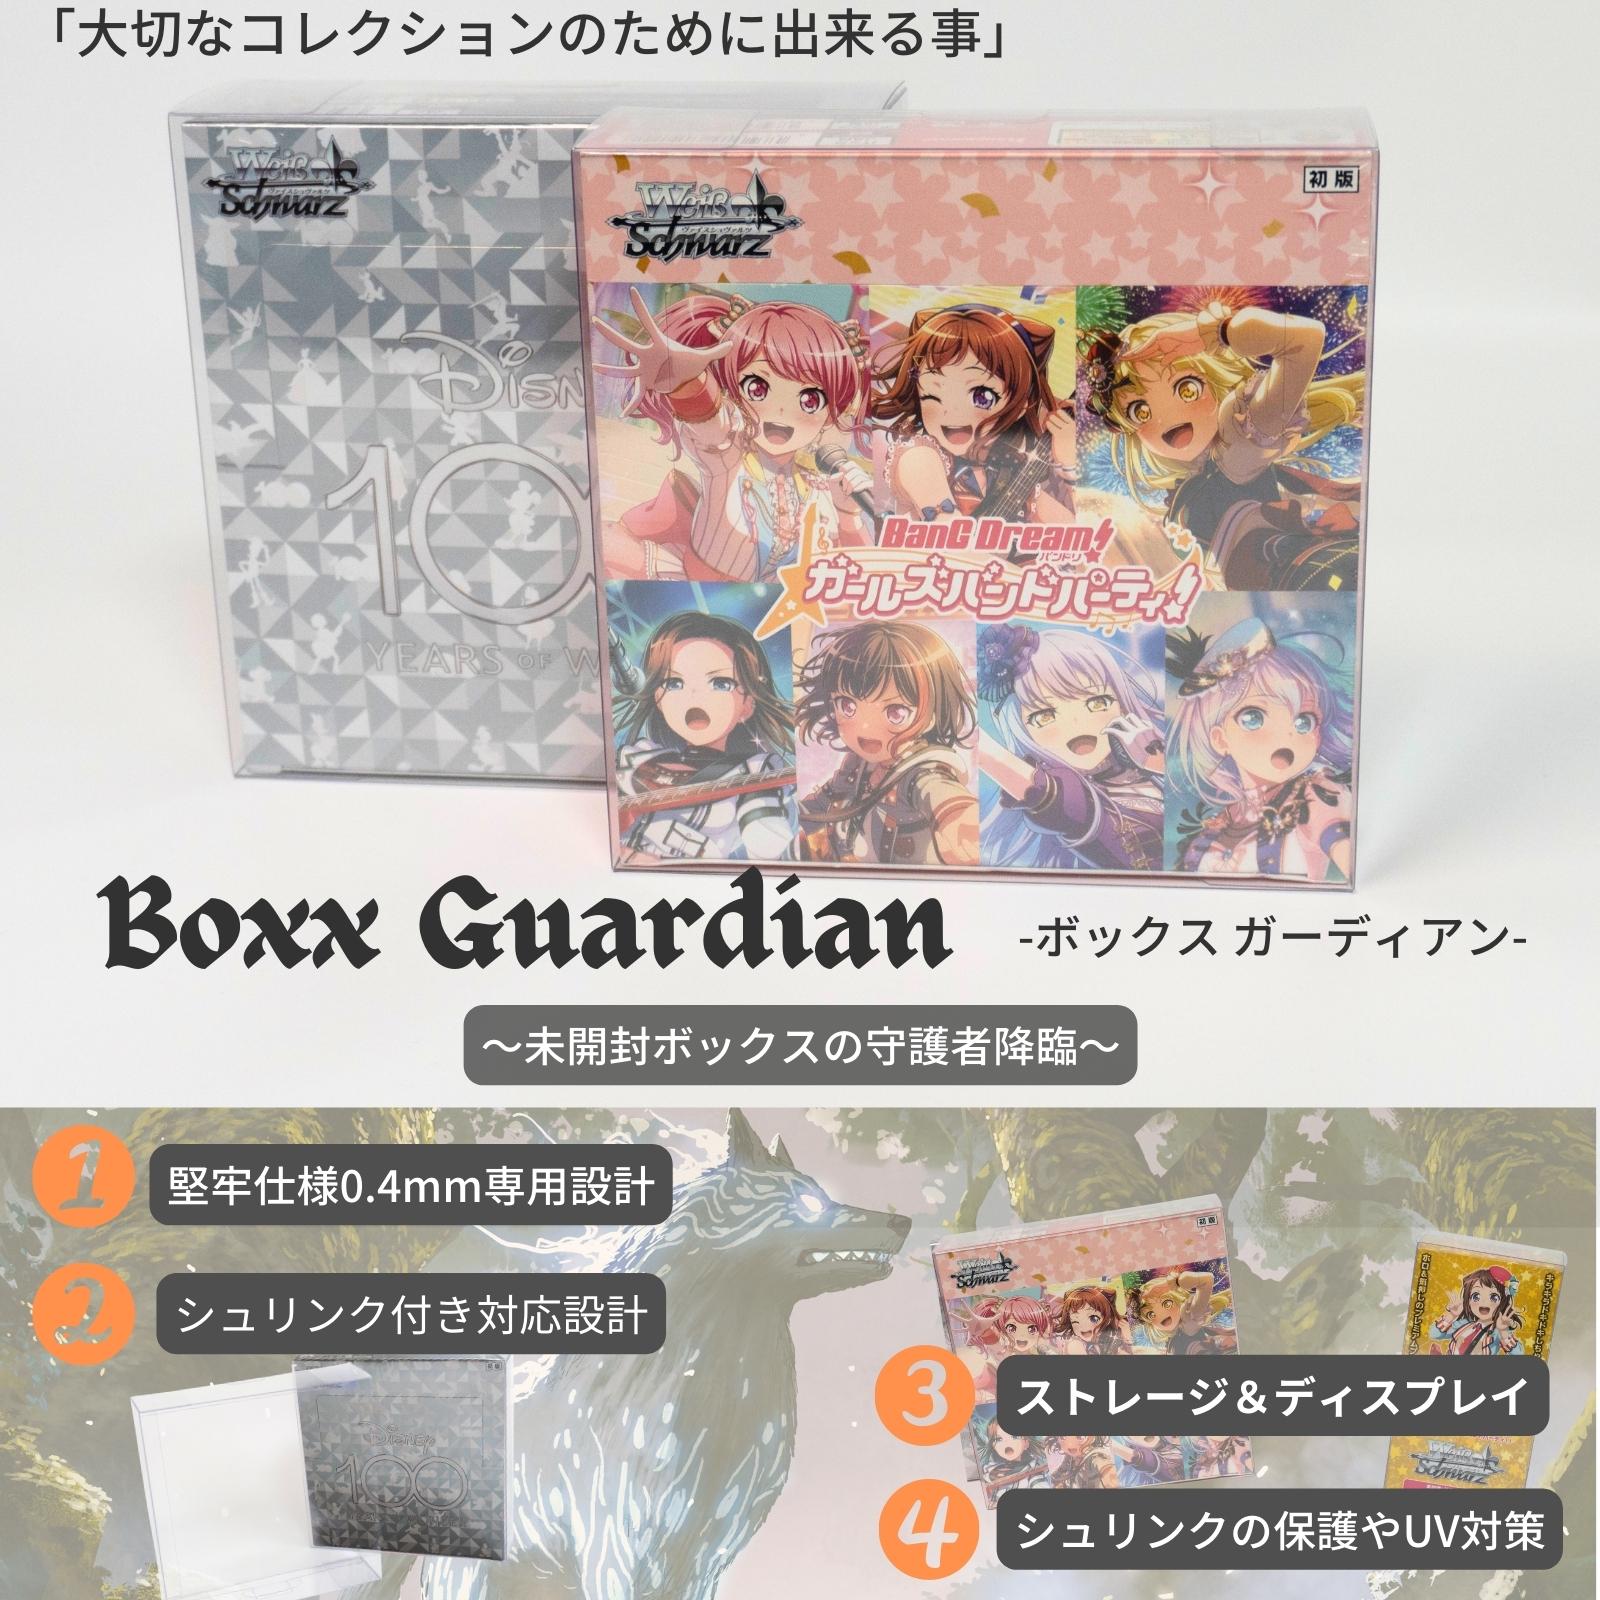 Boxx Guardian ヴァイスシュヴァルツBOX用 ブースターパックBOX